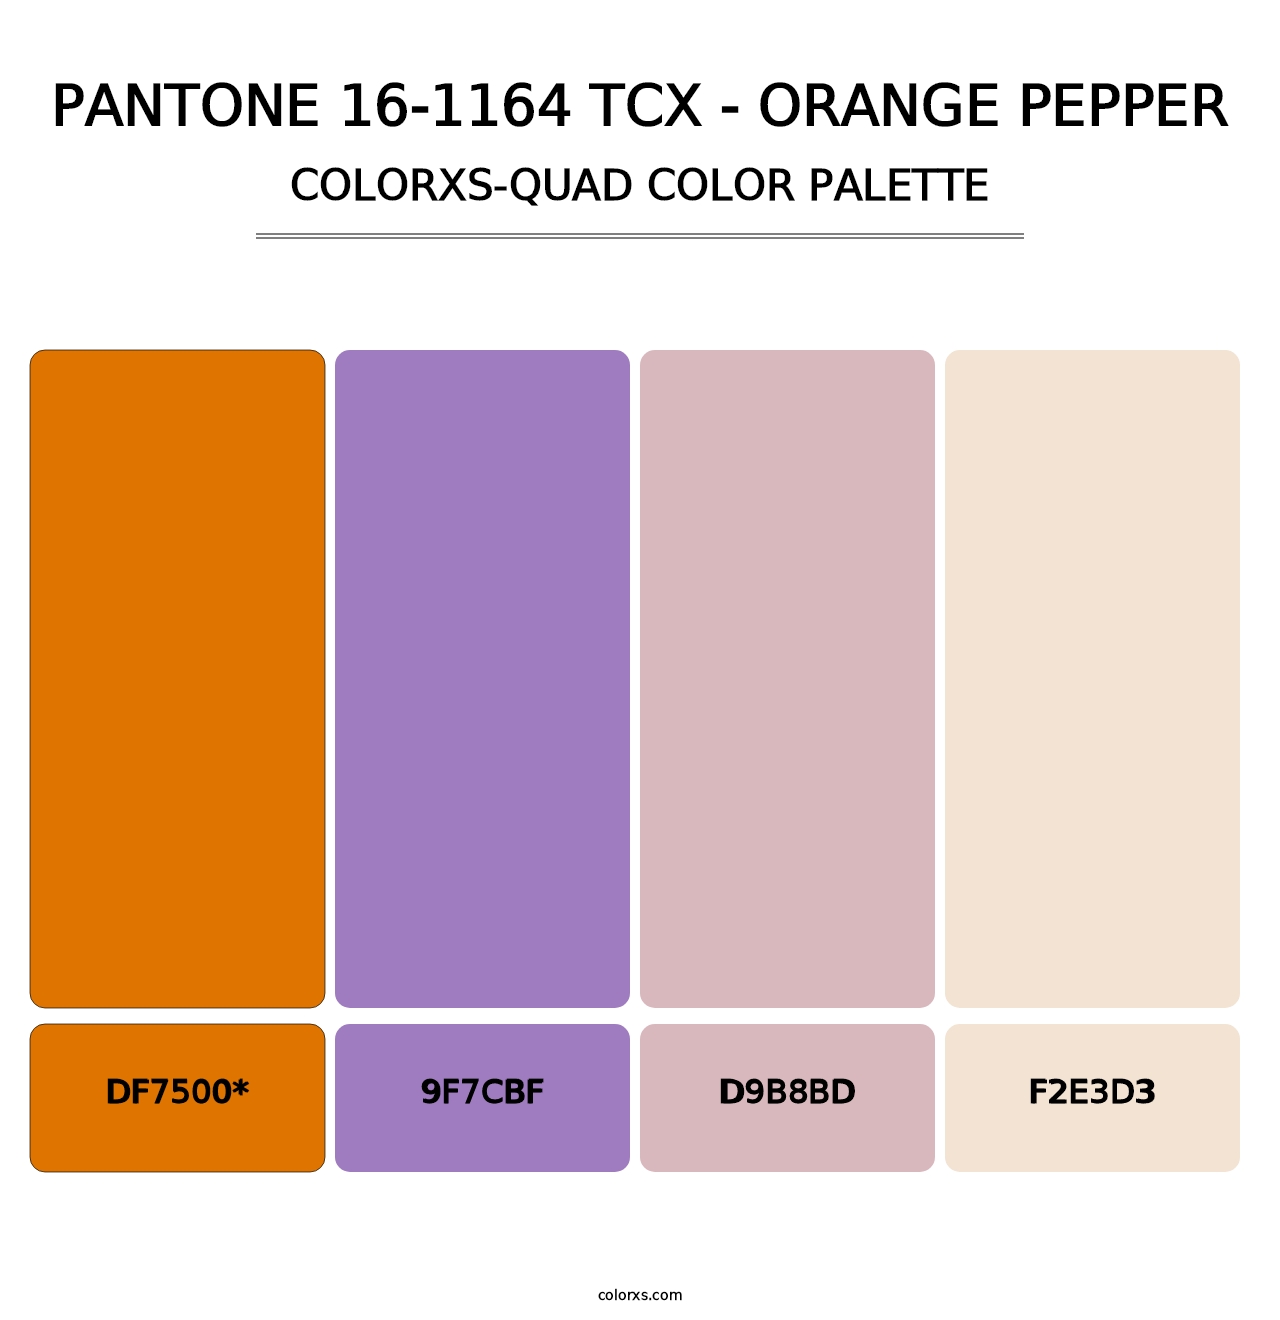 PANTONE 16-1164 TCX - Orange Pepper - Colorxs Quad Palette